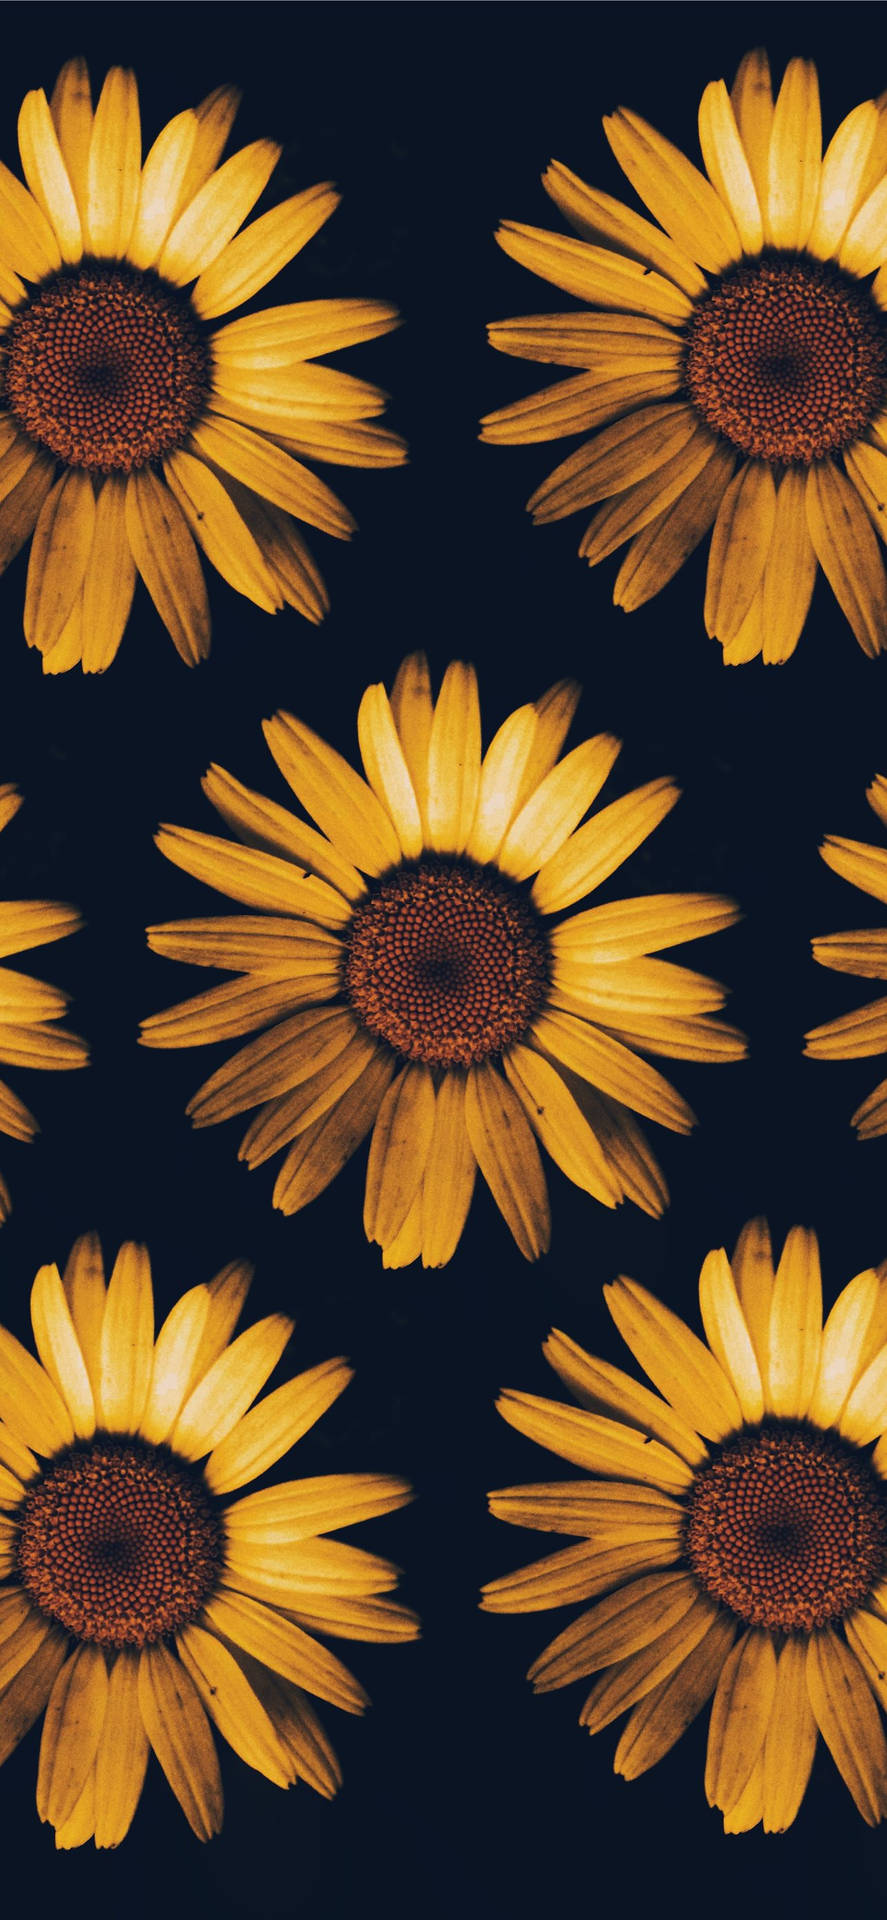 Free Sunflower Iphone Wallpaper Downloads, [100+] Sunflower Iphone  Wallpapers for FREE 